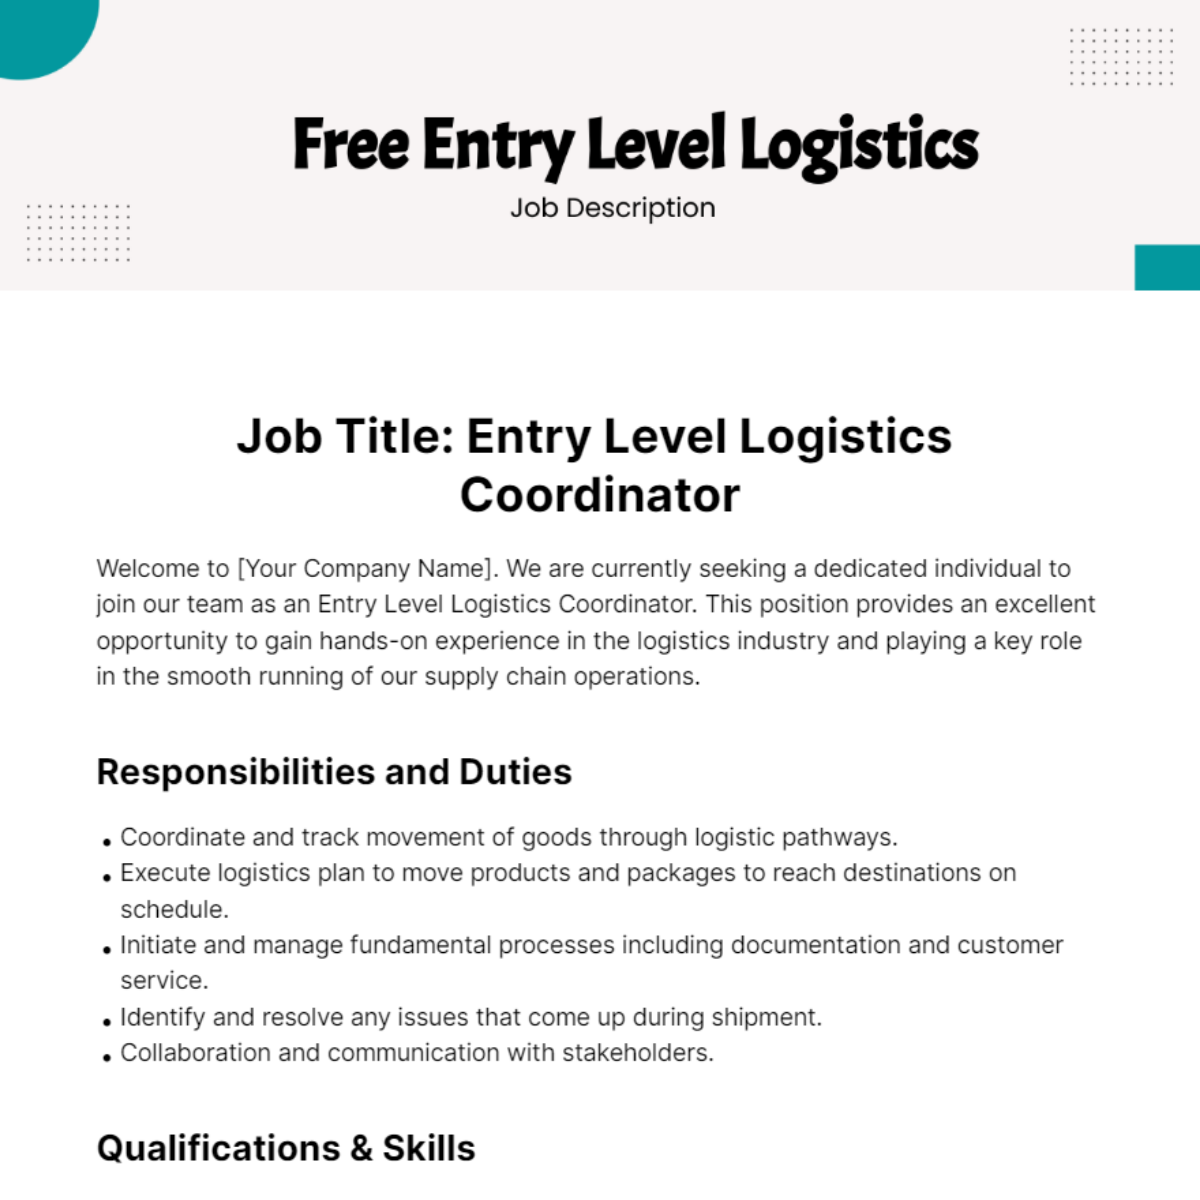 Free Entry Level Logistics Job Description Template